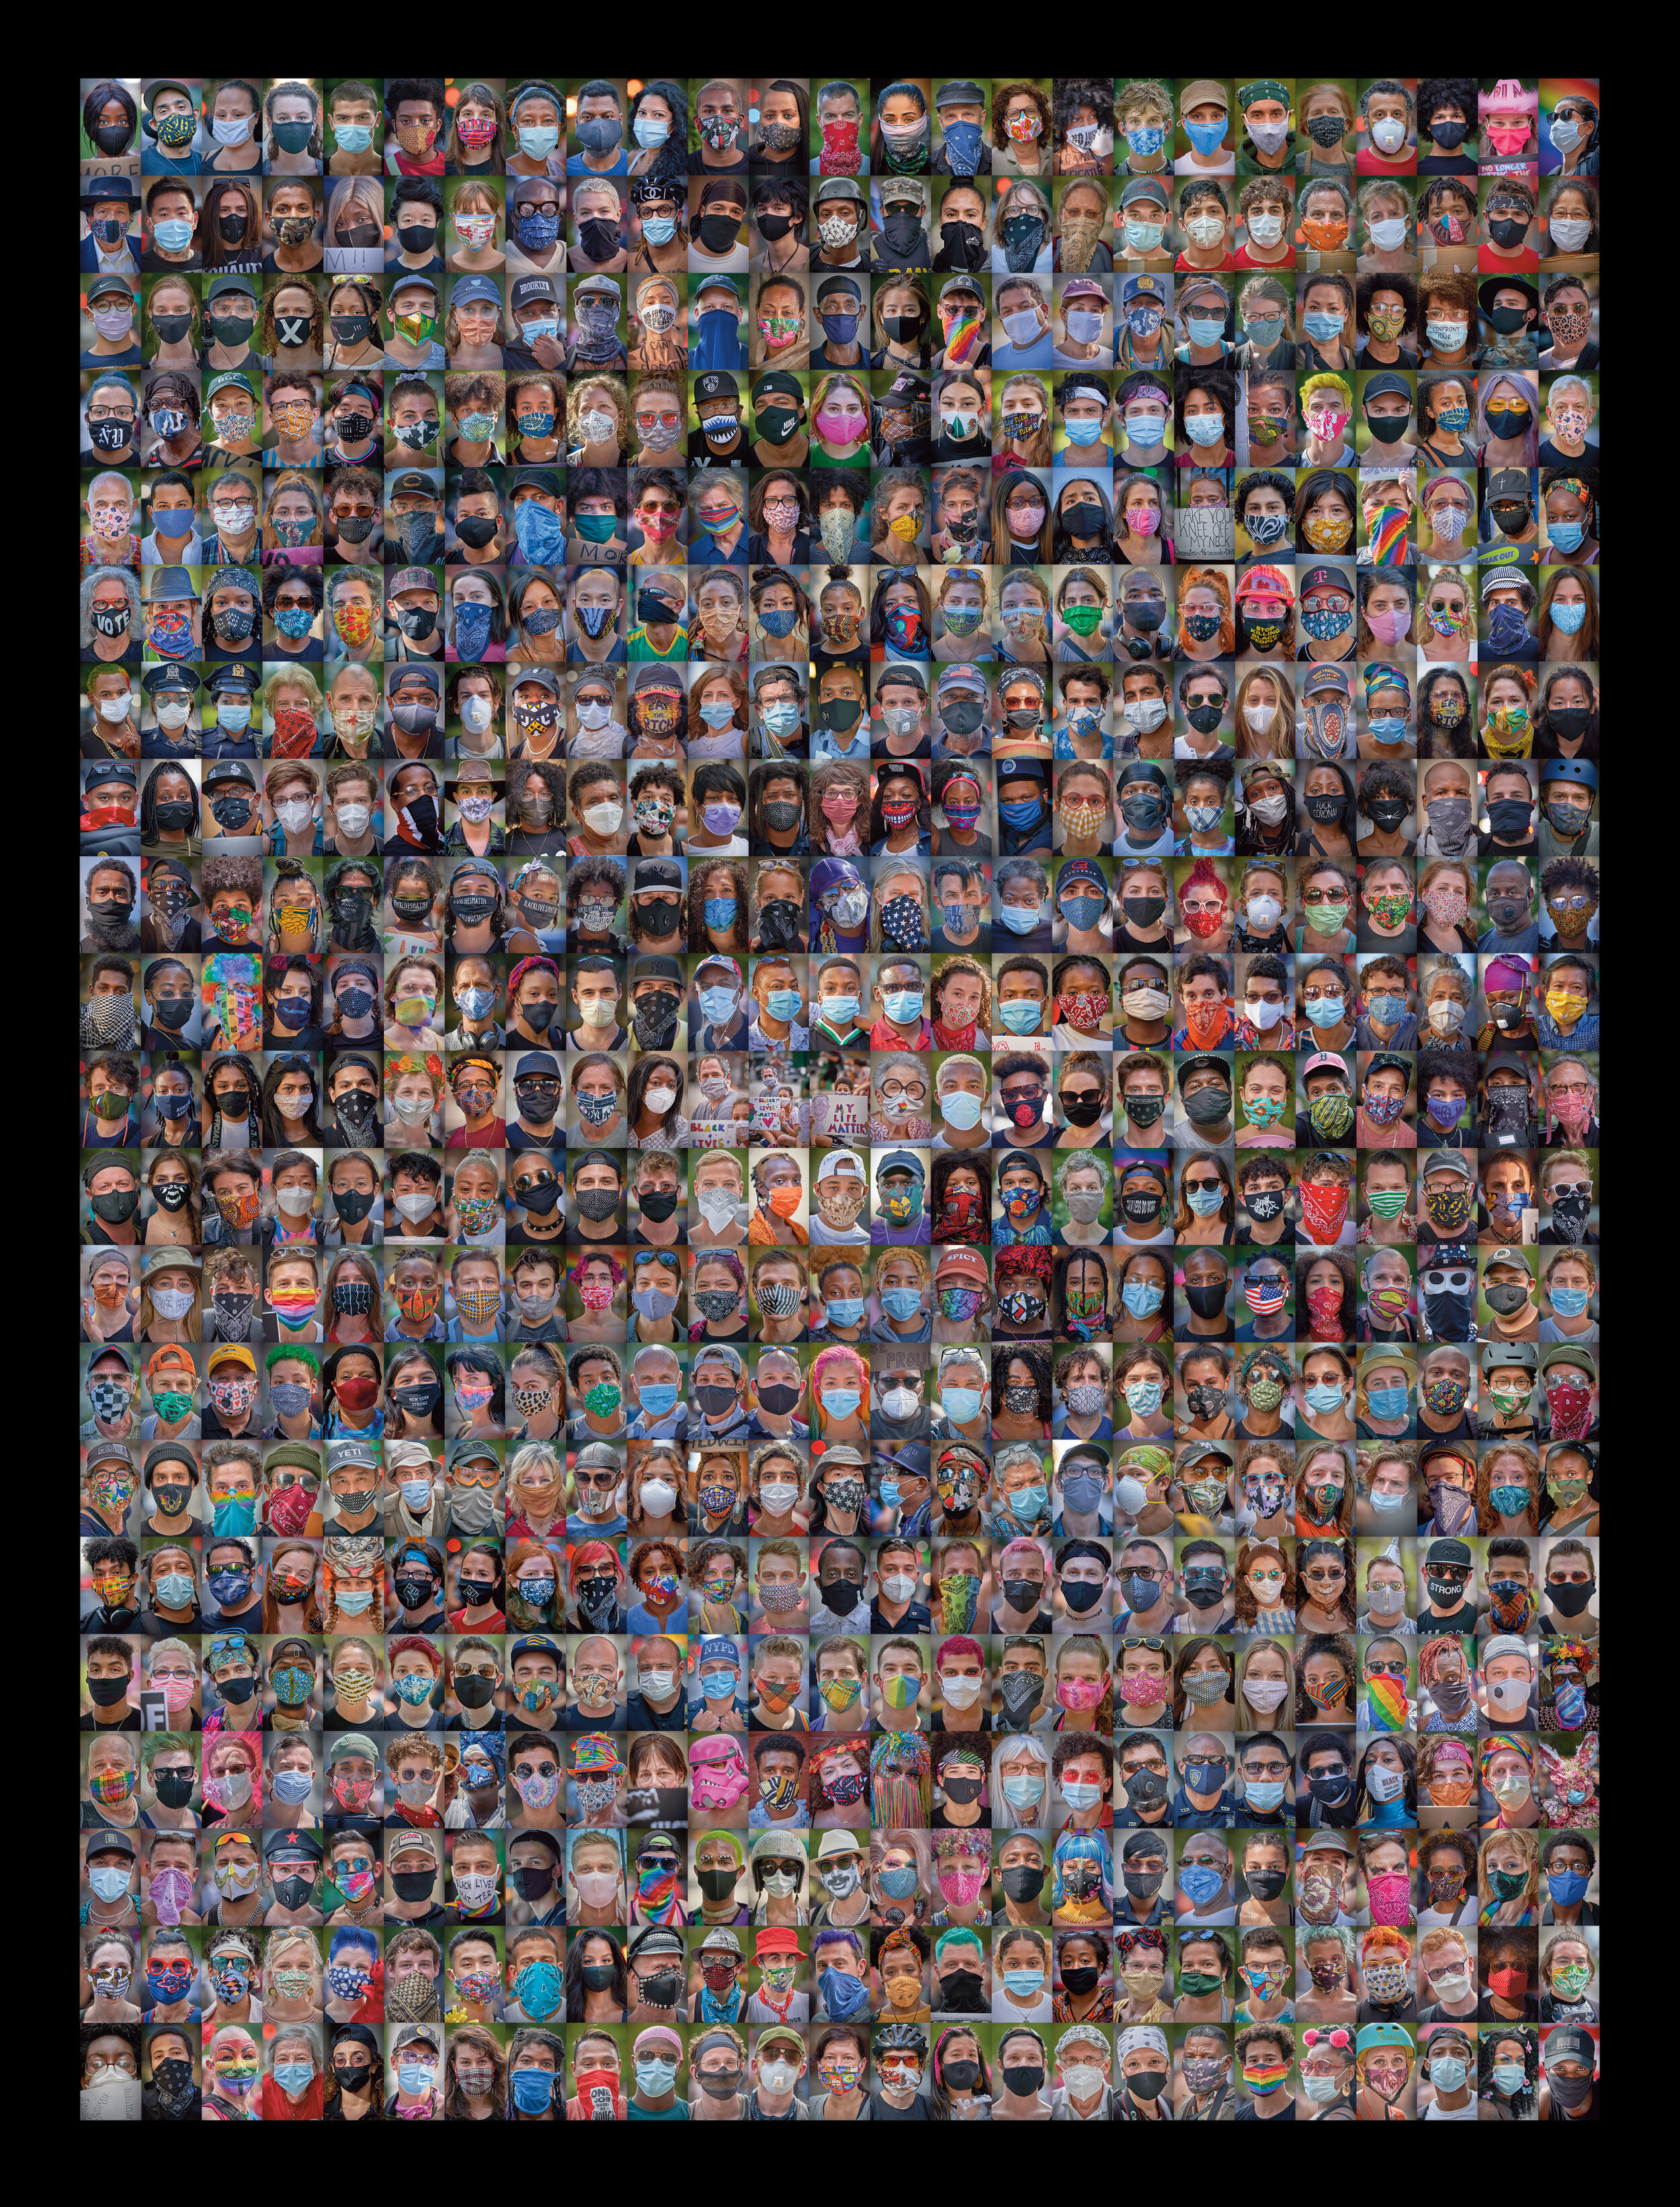 2020-07-26-Masked grid 2.5'x4' sRGB 9.2MB.jpg